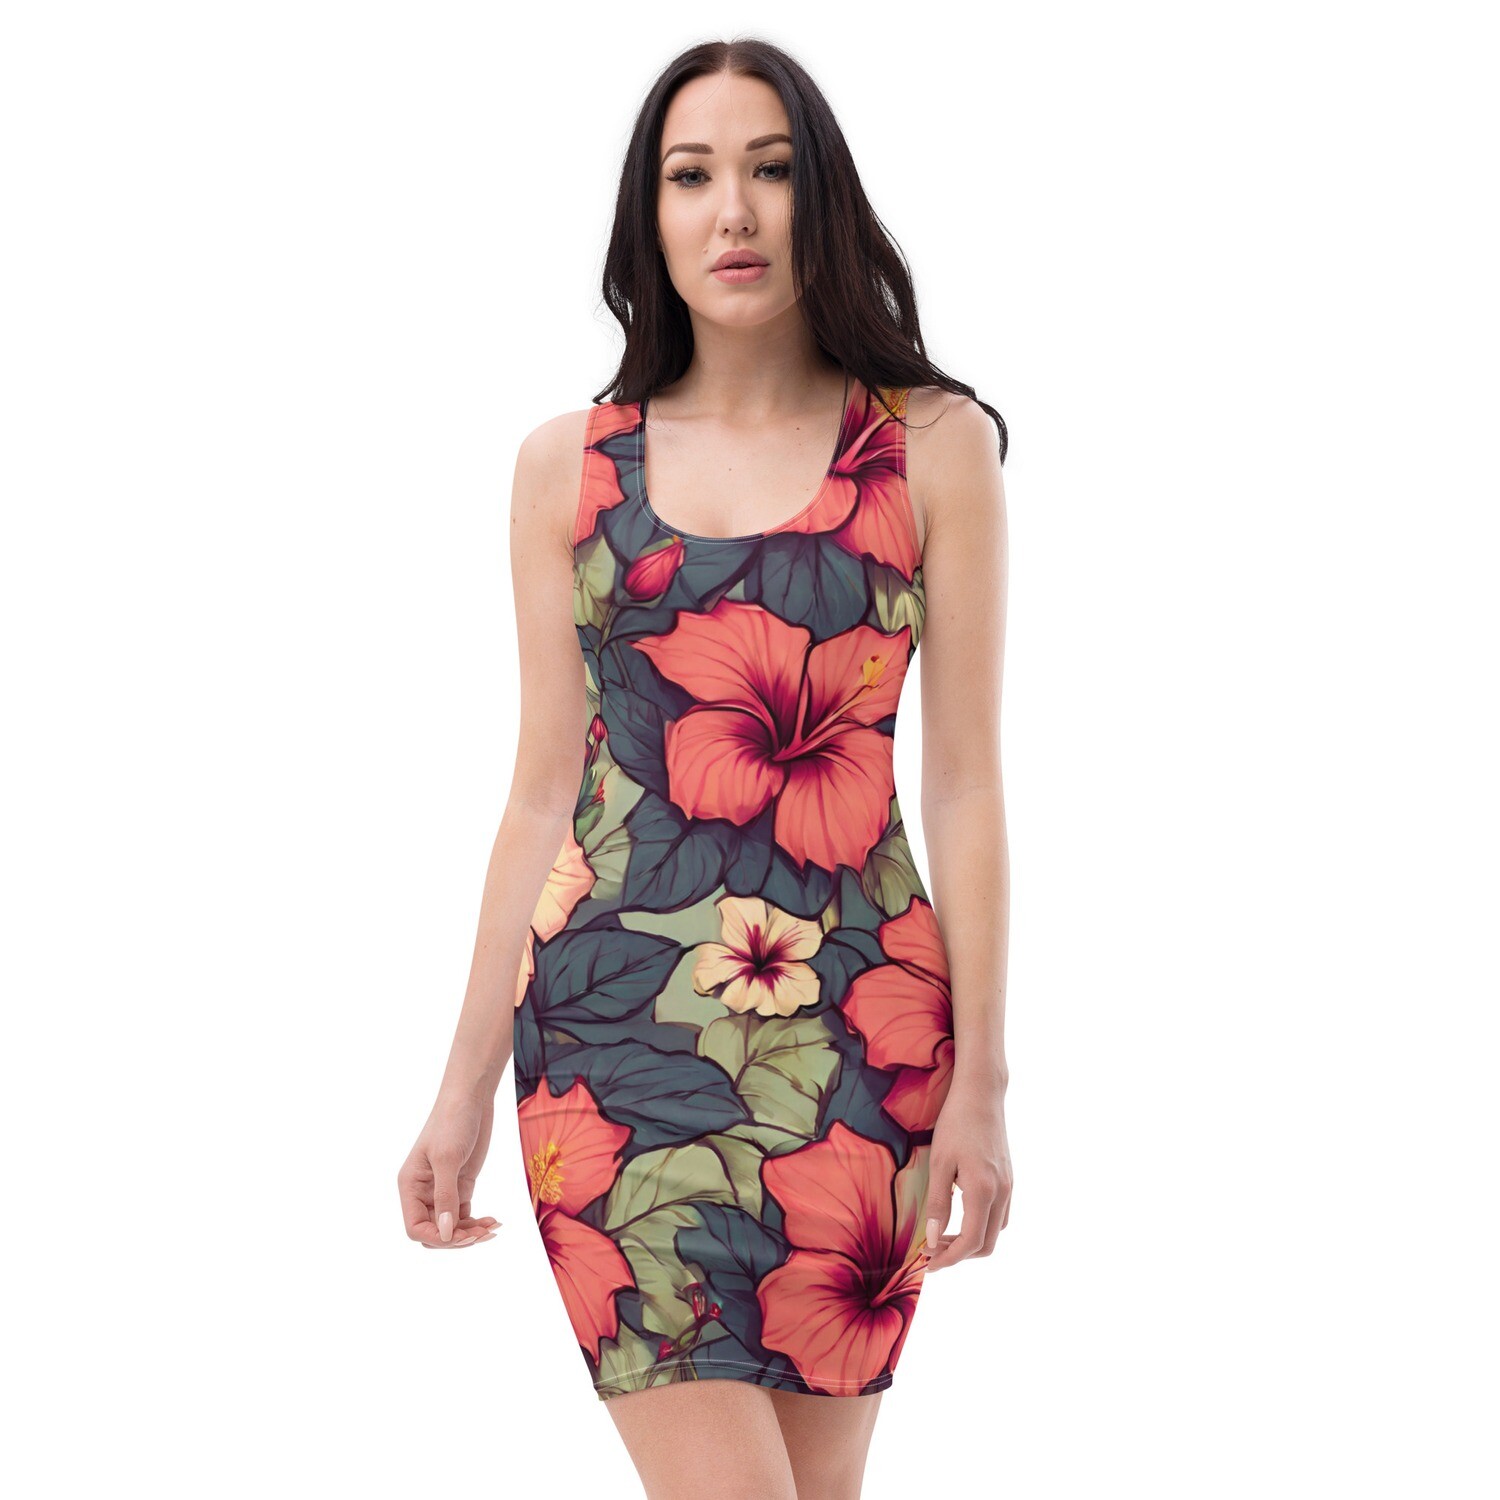 Hawaiian tropical pattern bodycon beach dress in sizes XS-XL